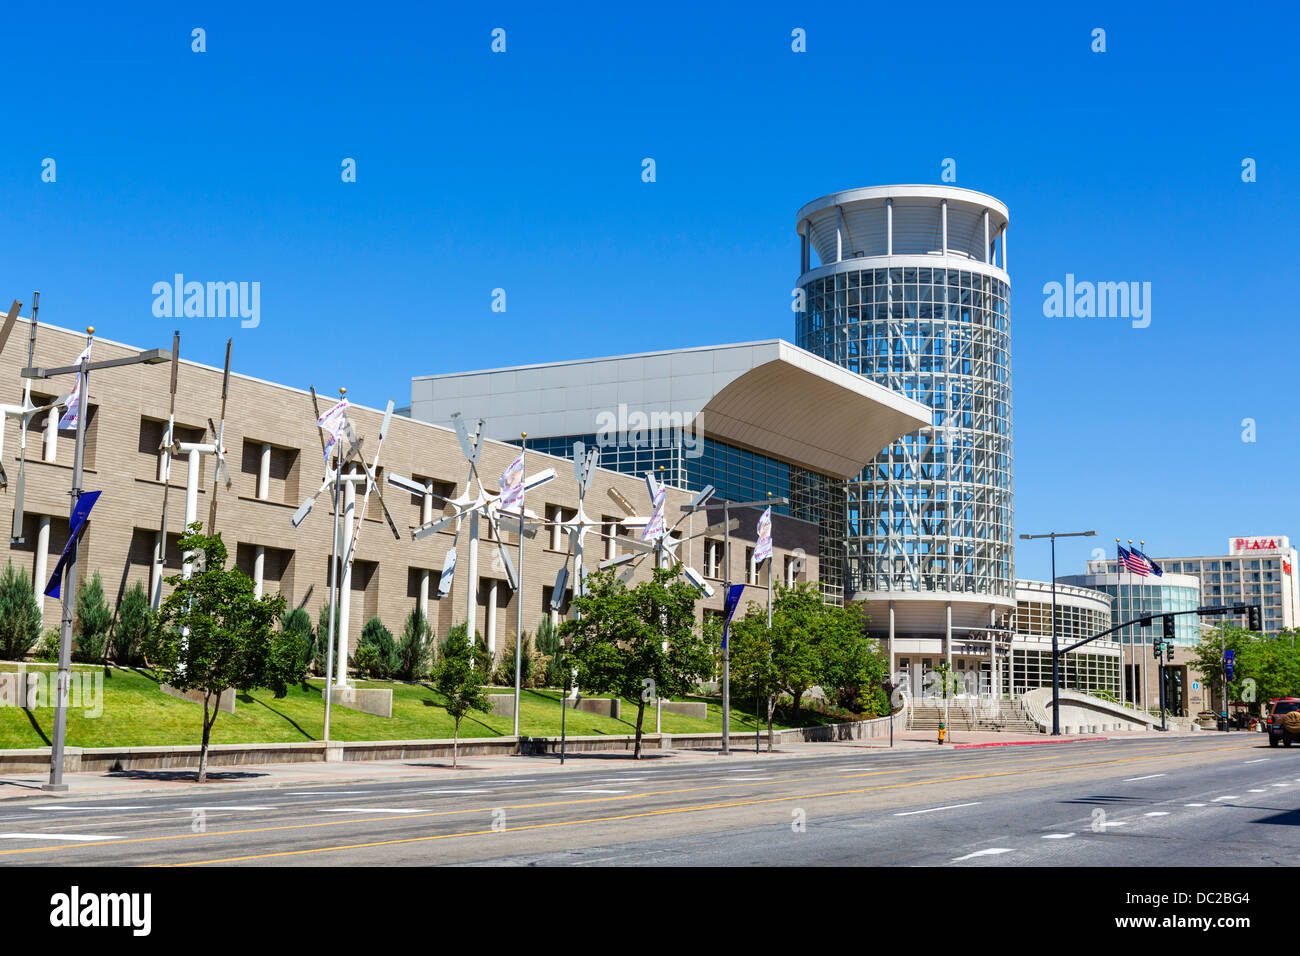 El Calvin L Rampton Salt Palace Convention Center, West Temple, Salt Lake City, Utah, EE.UU. Foto de stock